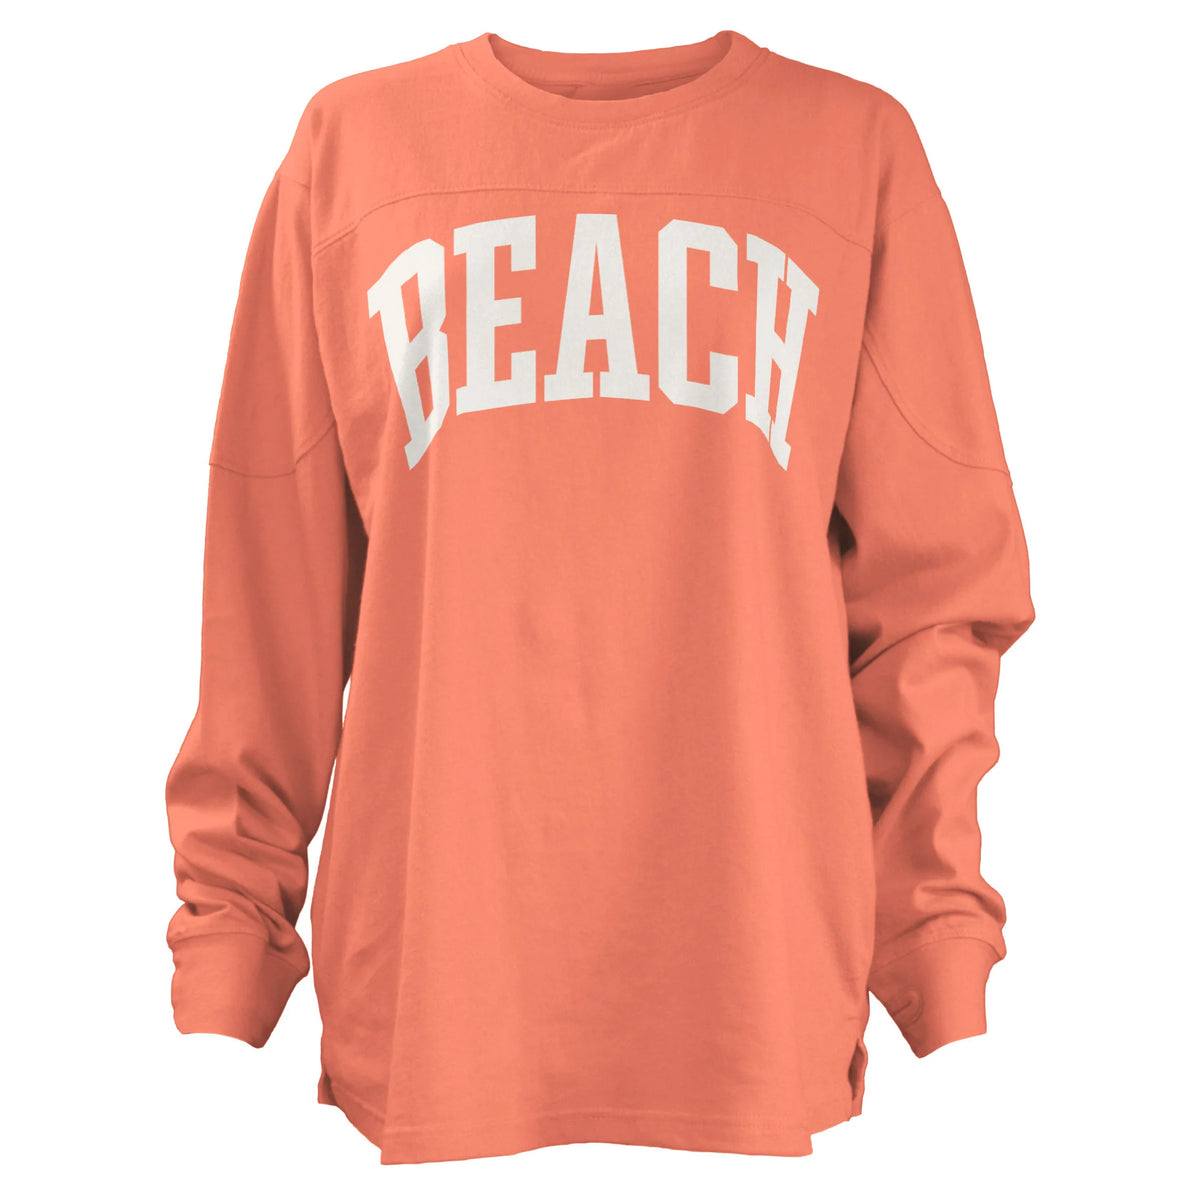 Beach "Big Shirt" Tee